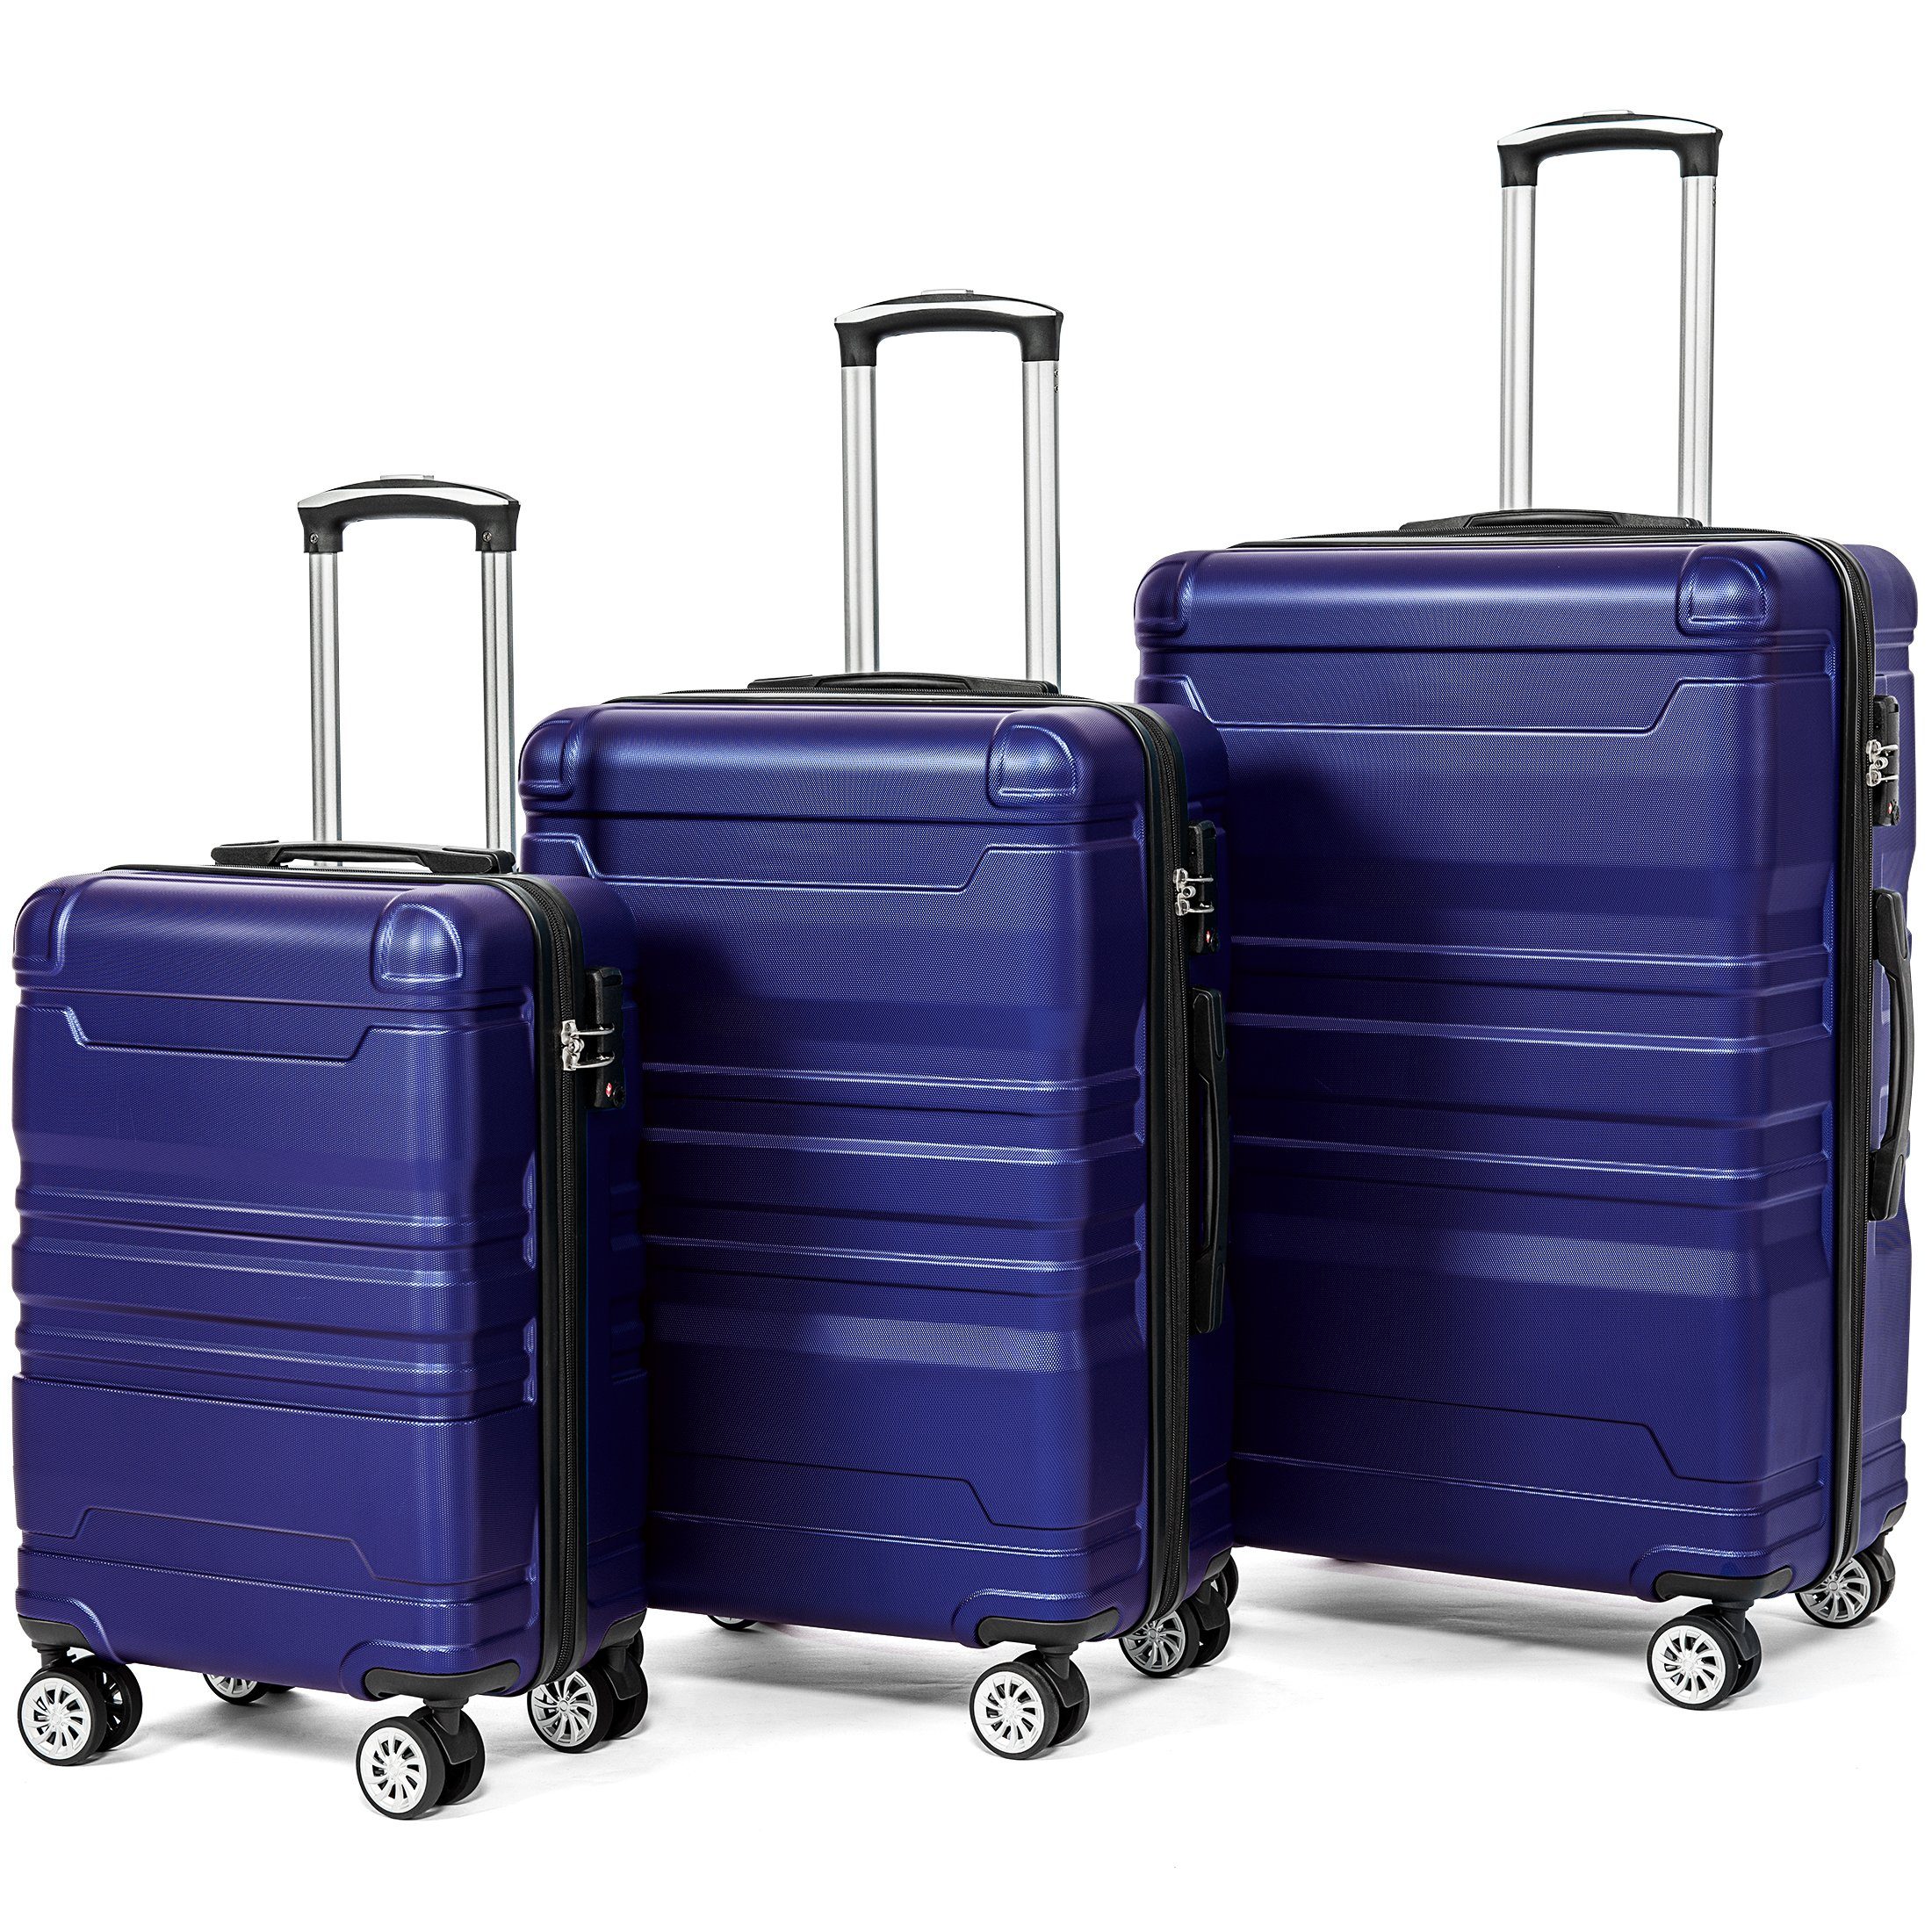 Ulife Kofferset Hartschalen-Trolley, Aufgabegepäck, 3 teilig, 4 Rollen, (Set), blau, 360° Rollen, TSA Zahlenschloss, 3-teiliger verstellbarer Griff